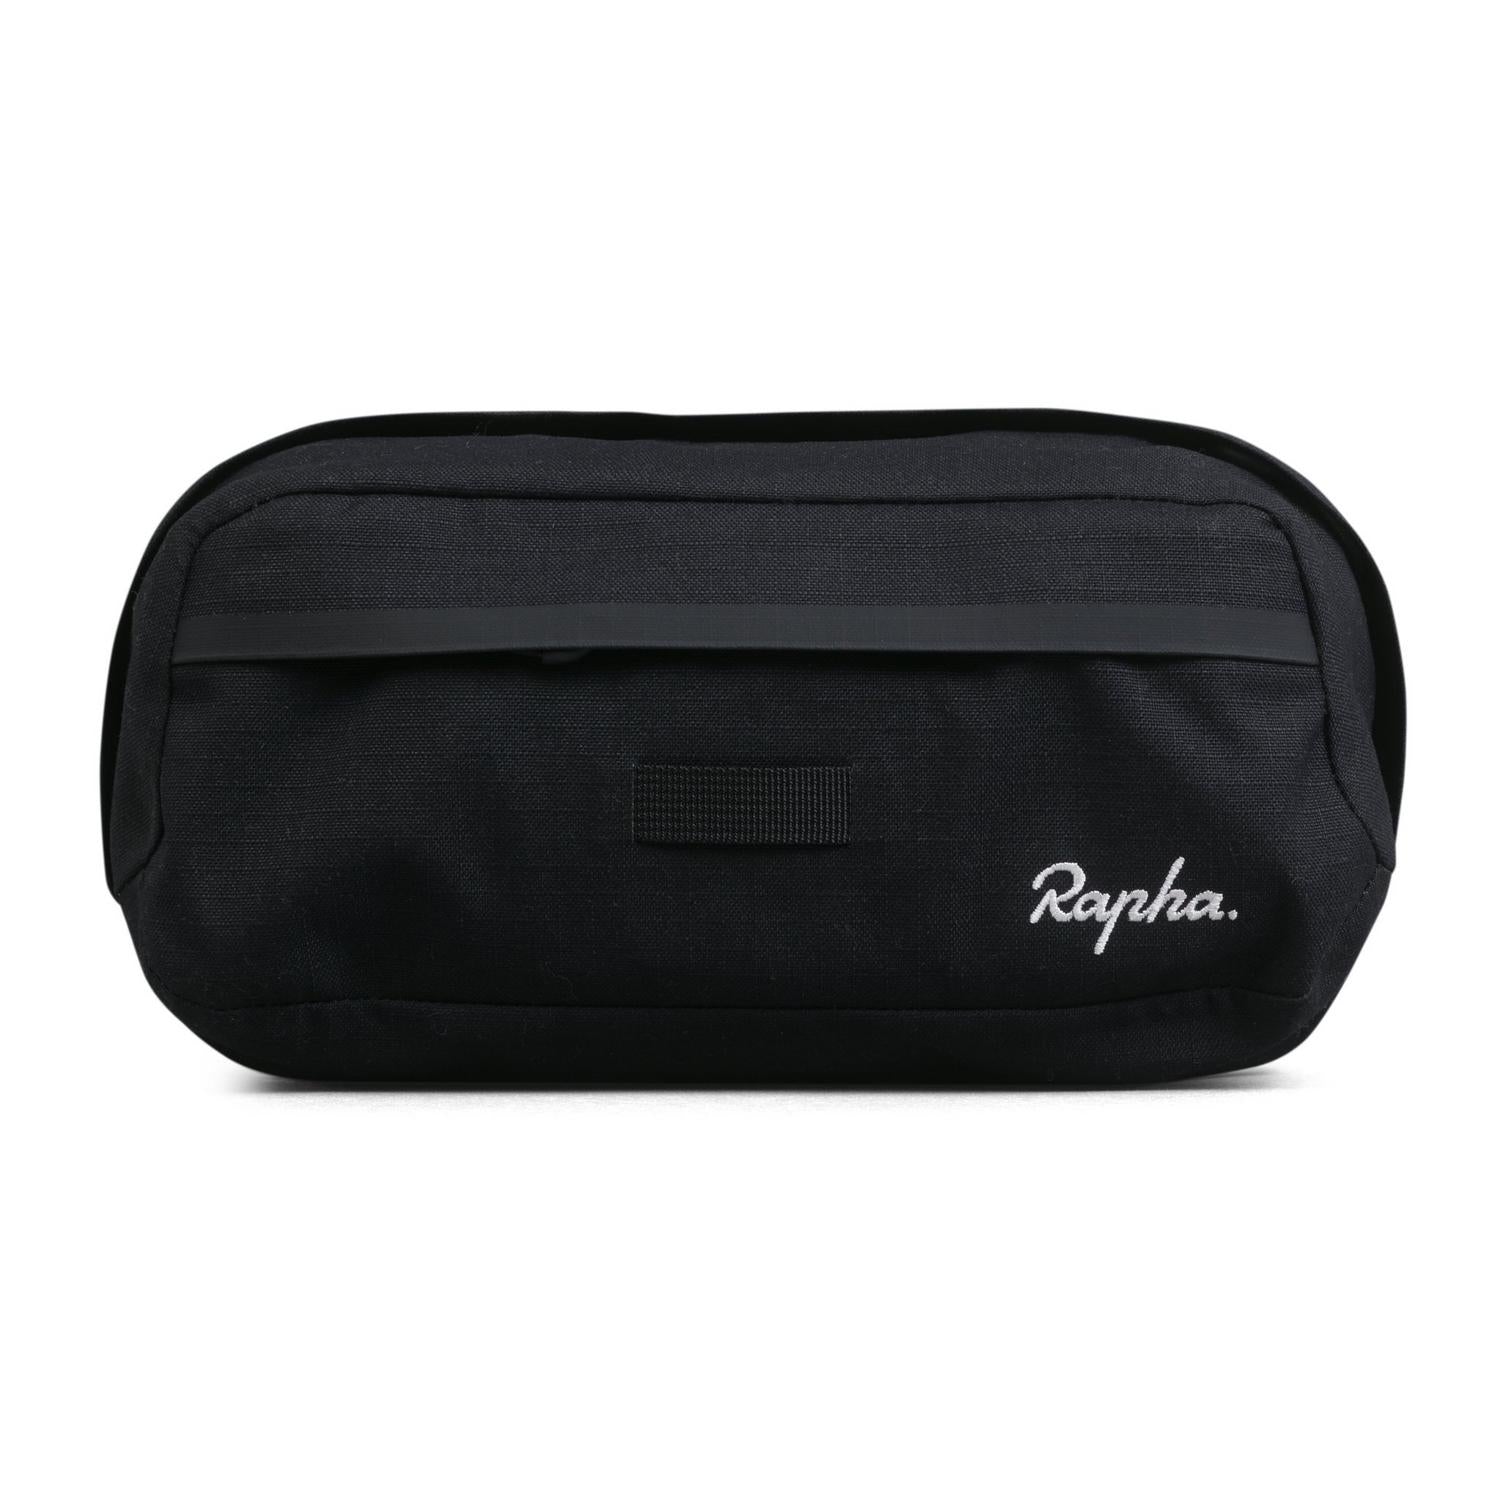 Rapha Explore Bar Bag, ACCESSORIES - COMMUTER & TRAVEL BAGS Rapha Black 